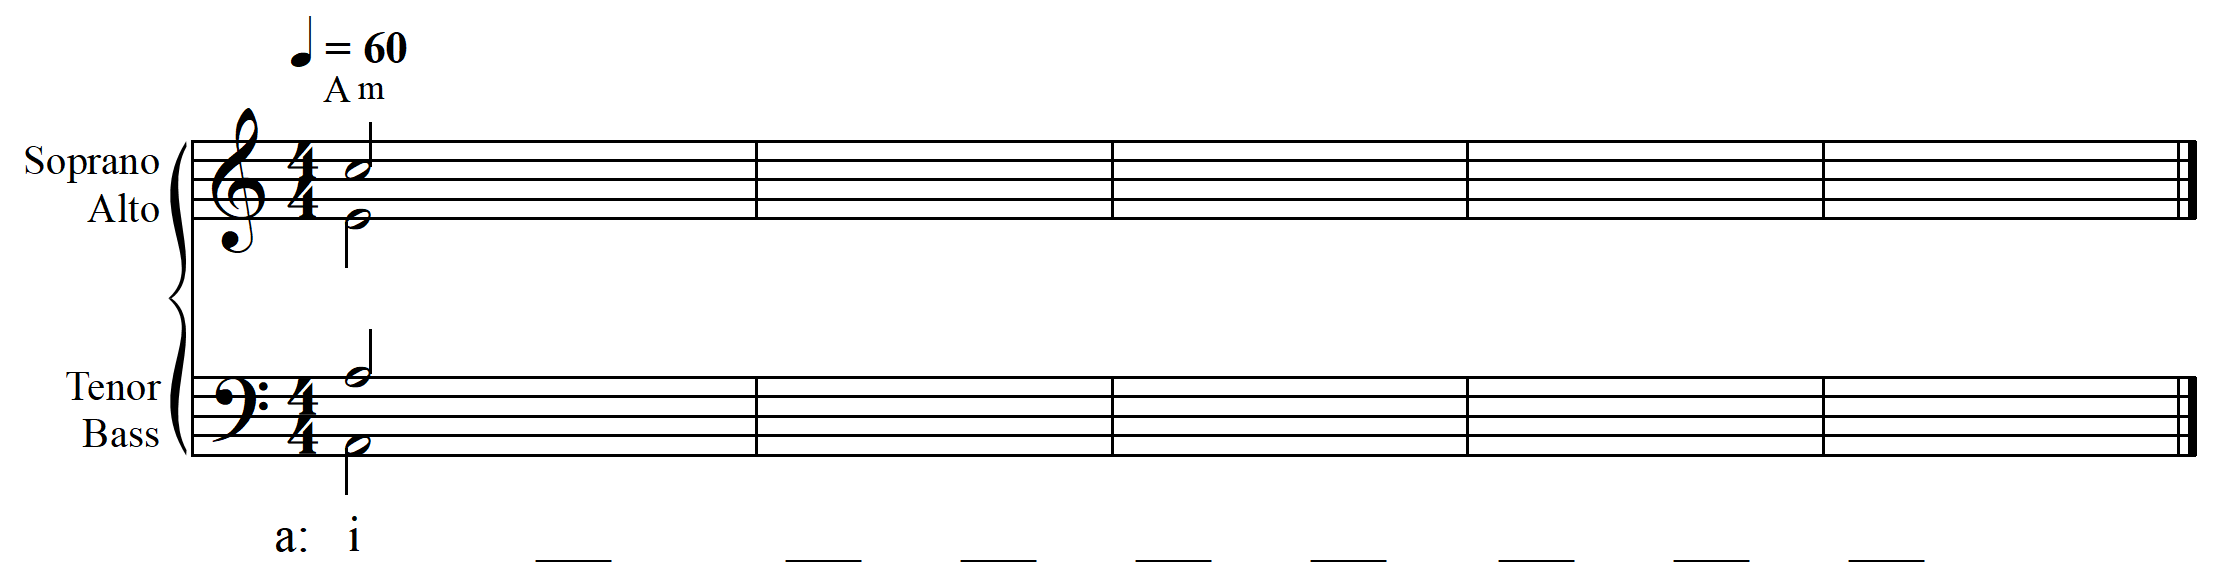 melodic dictation simple meter intermediate example 1